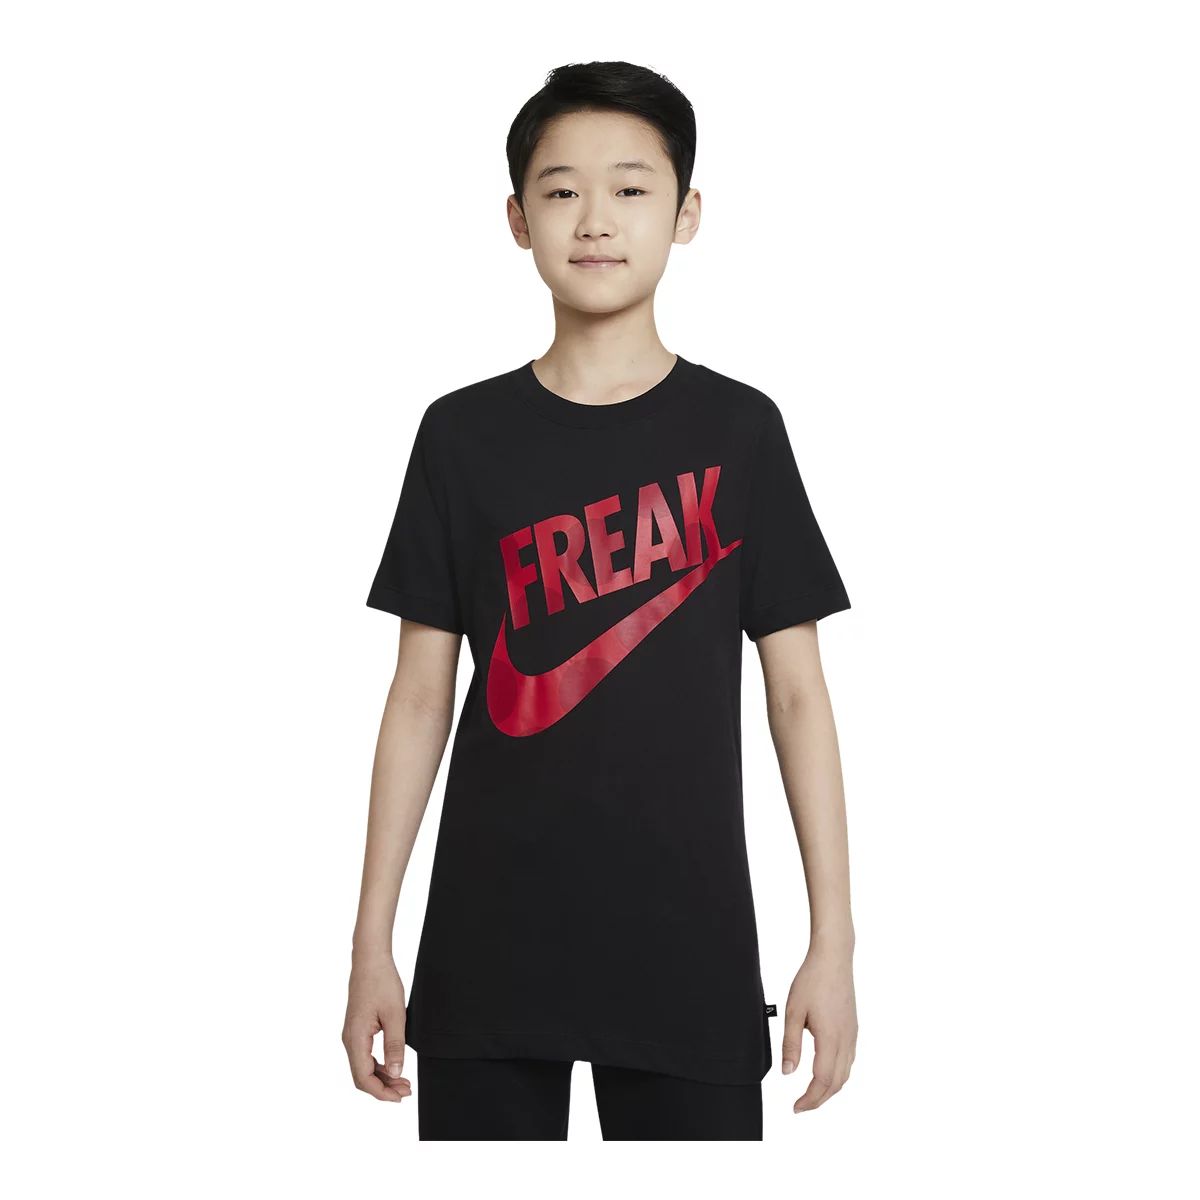 Nike / Boys' Dri-FIT Giannis Freak Graphic T-Shirt